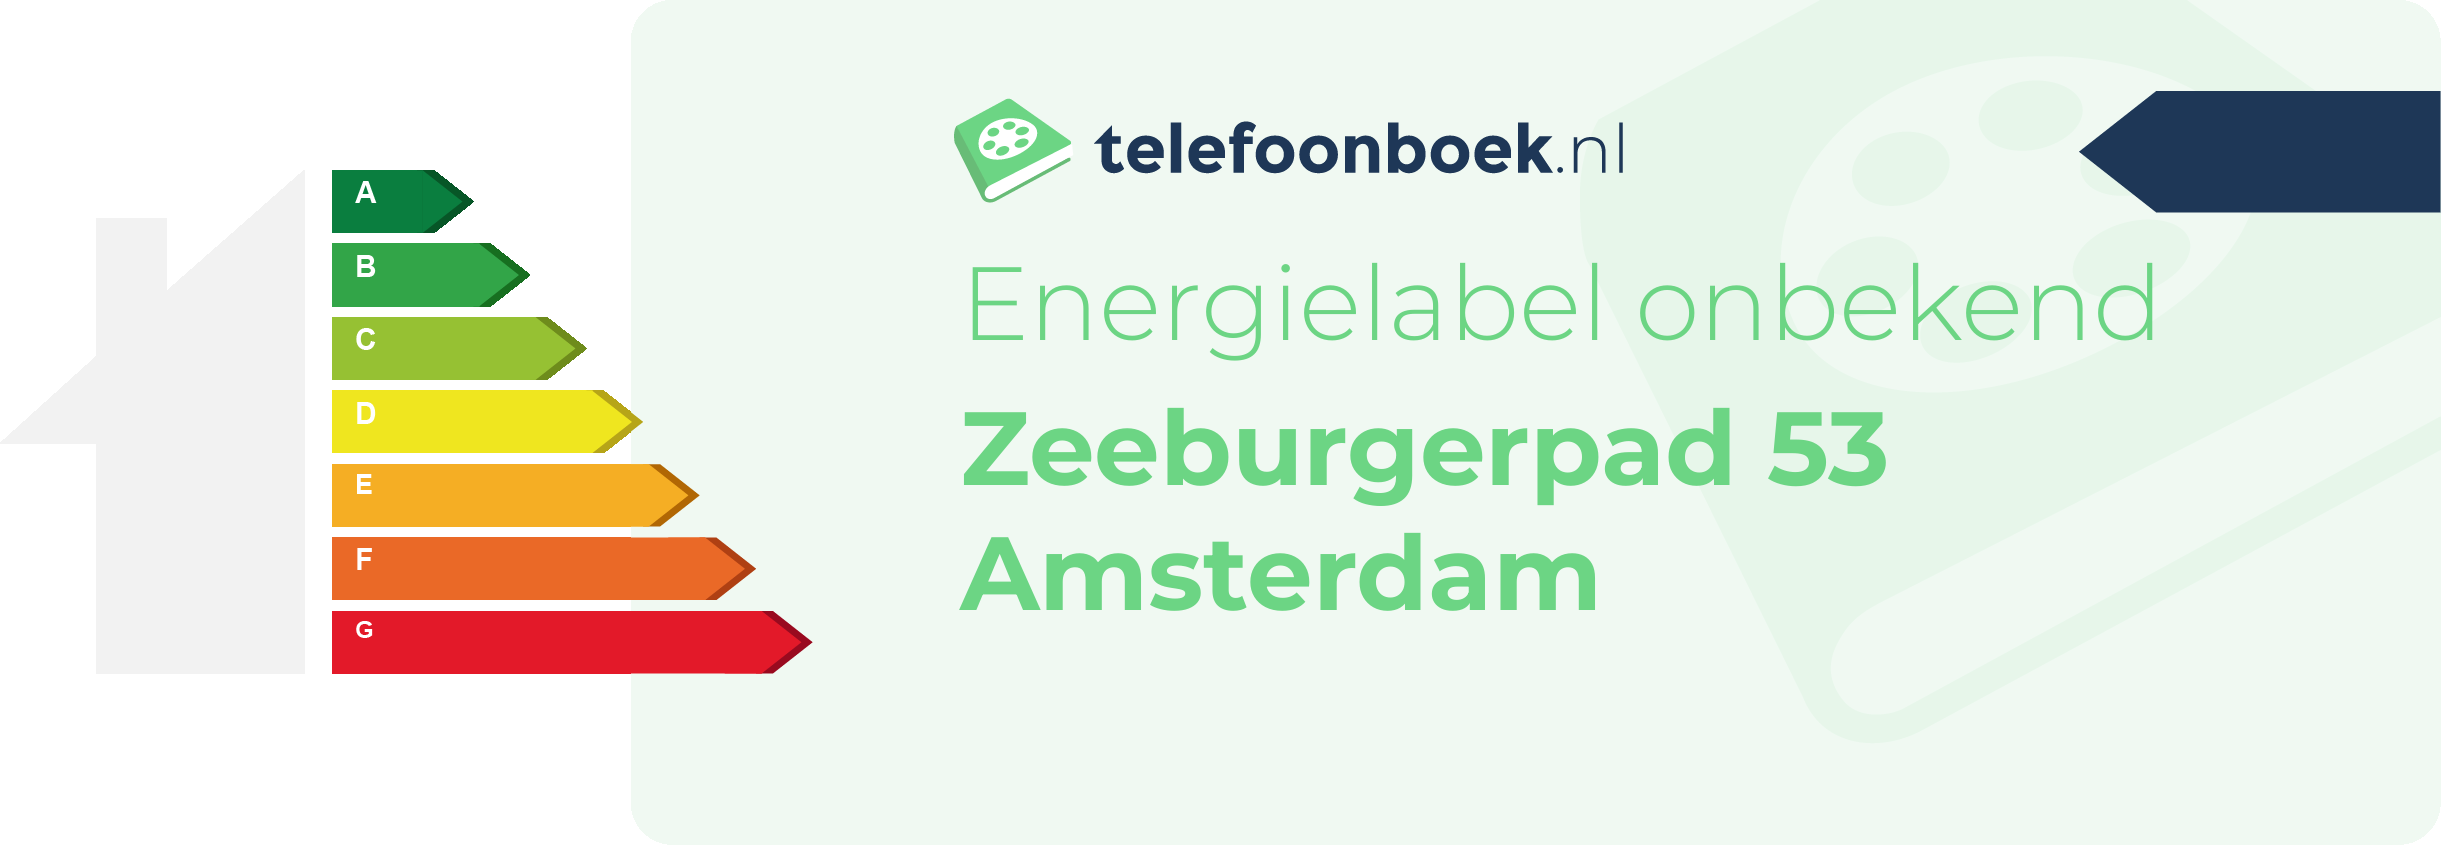 Energielabel Zeeburgerpad 53 Amsterdam